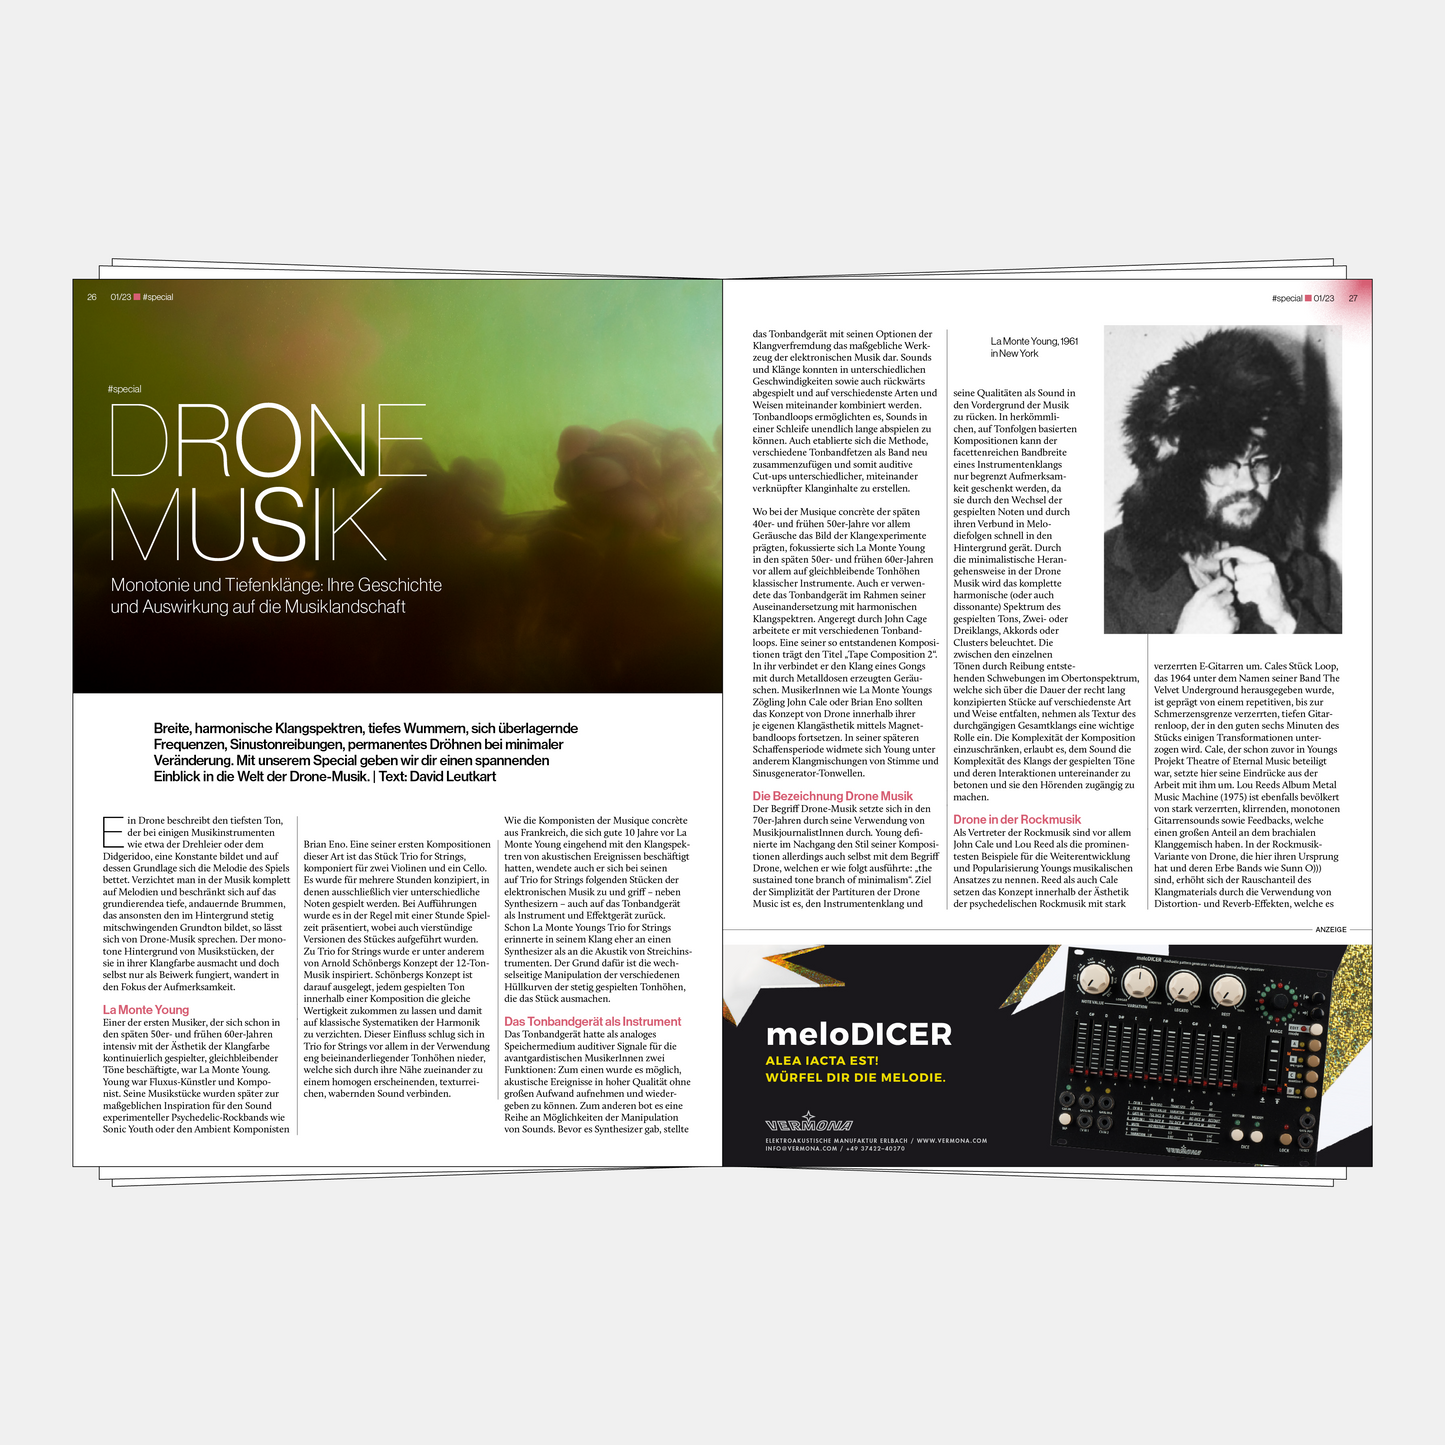 Synthesizer Magazin | Ausgabe 96 | April 2023 | Printausgabe